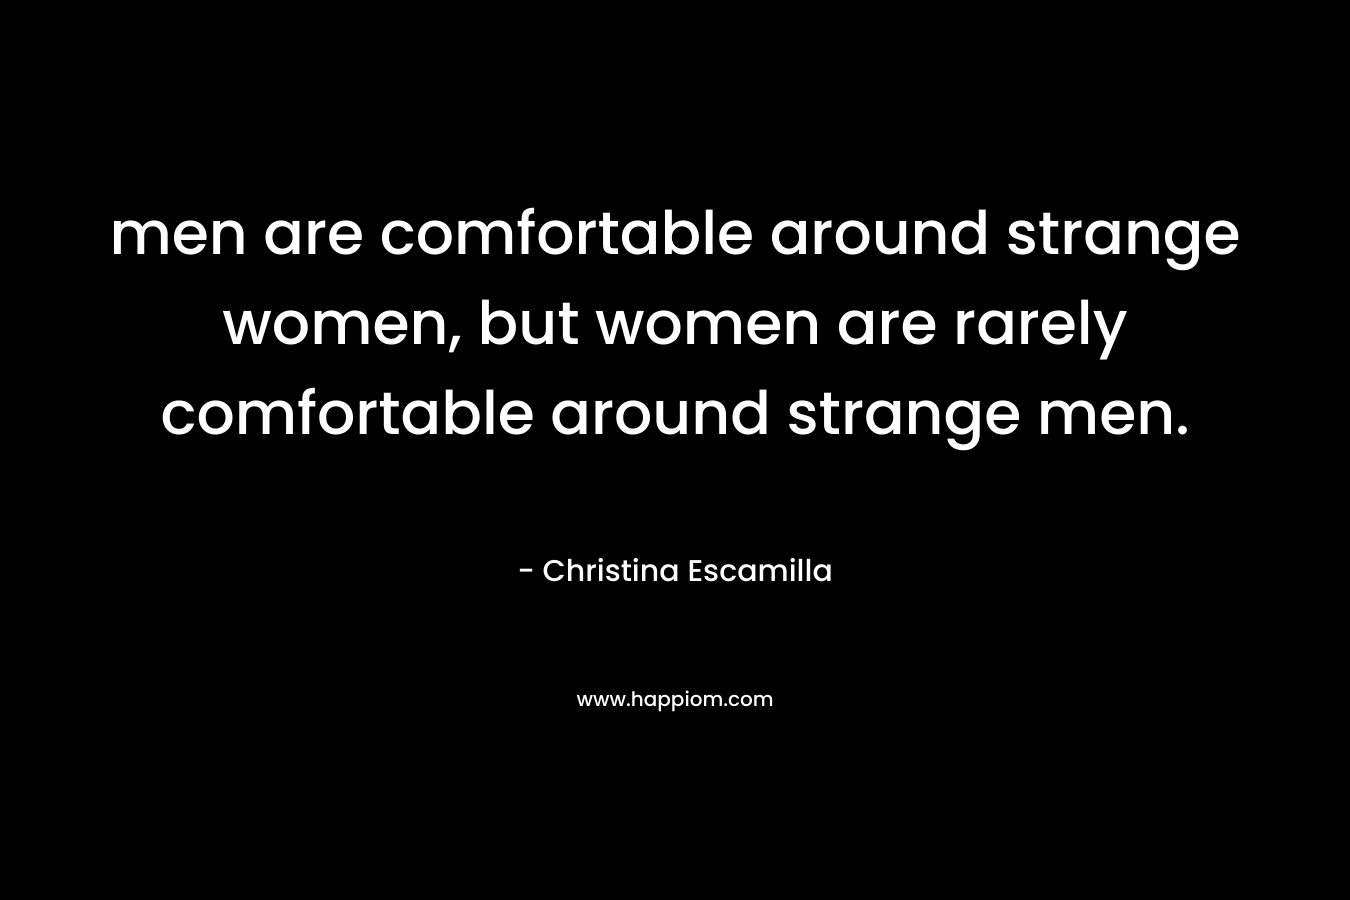 men are comfortable around strange women, but women are rarely comfortable around strange men.